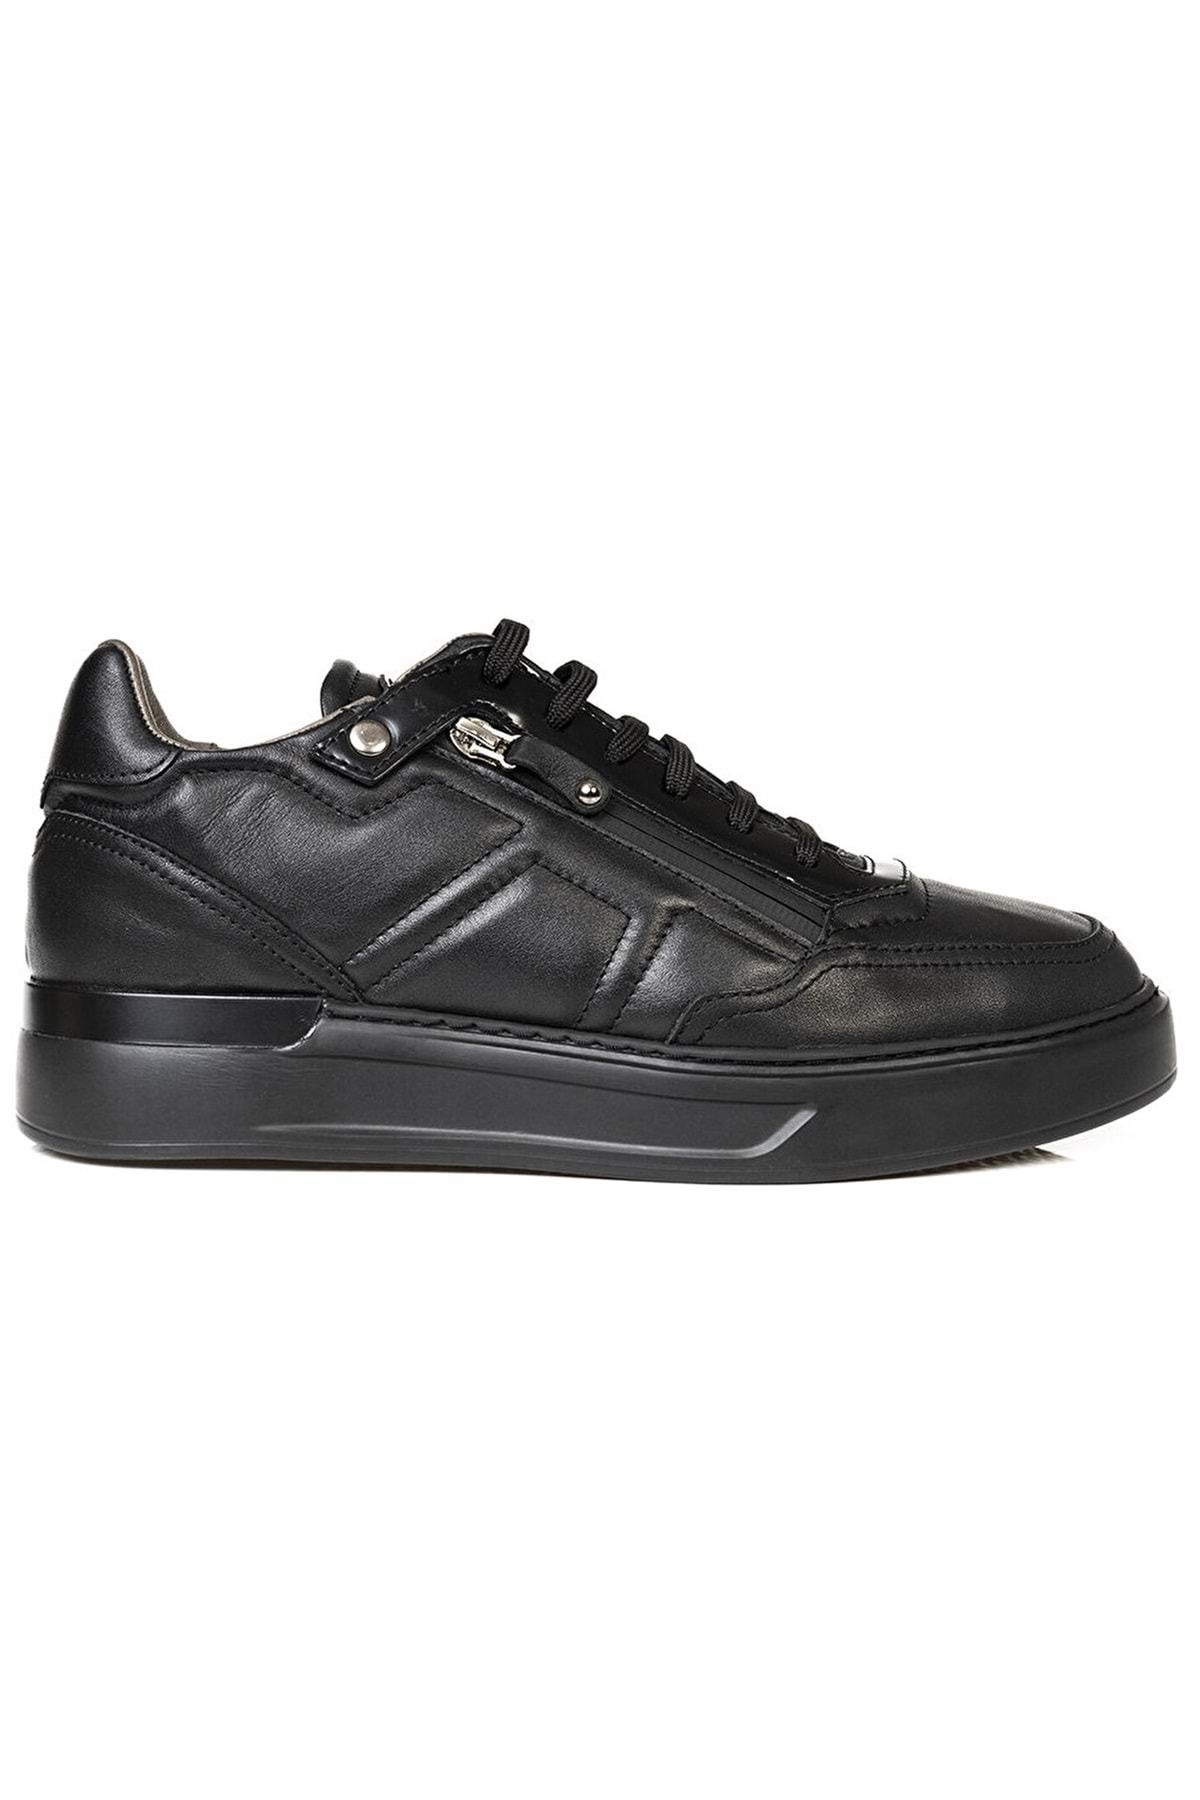 Greyder Erkek Siyah Hakiki Deri Sneaker Ayakkabı 3k1sa16470